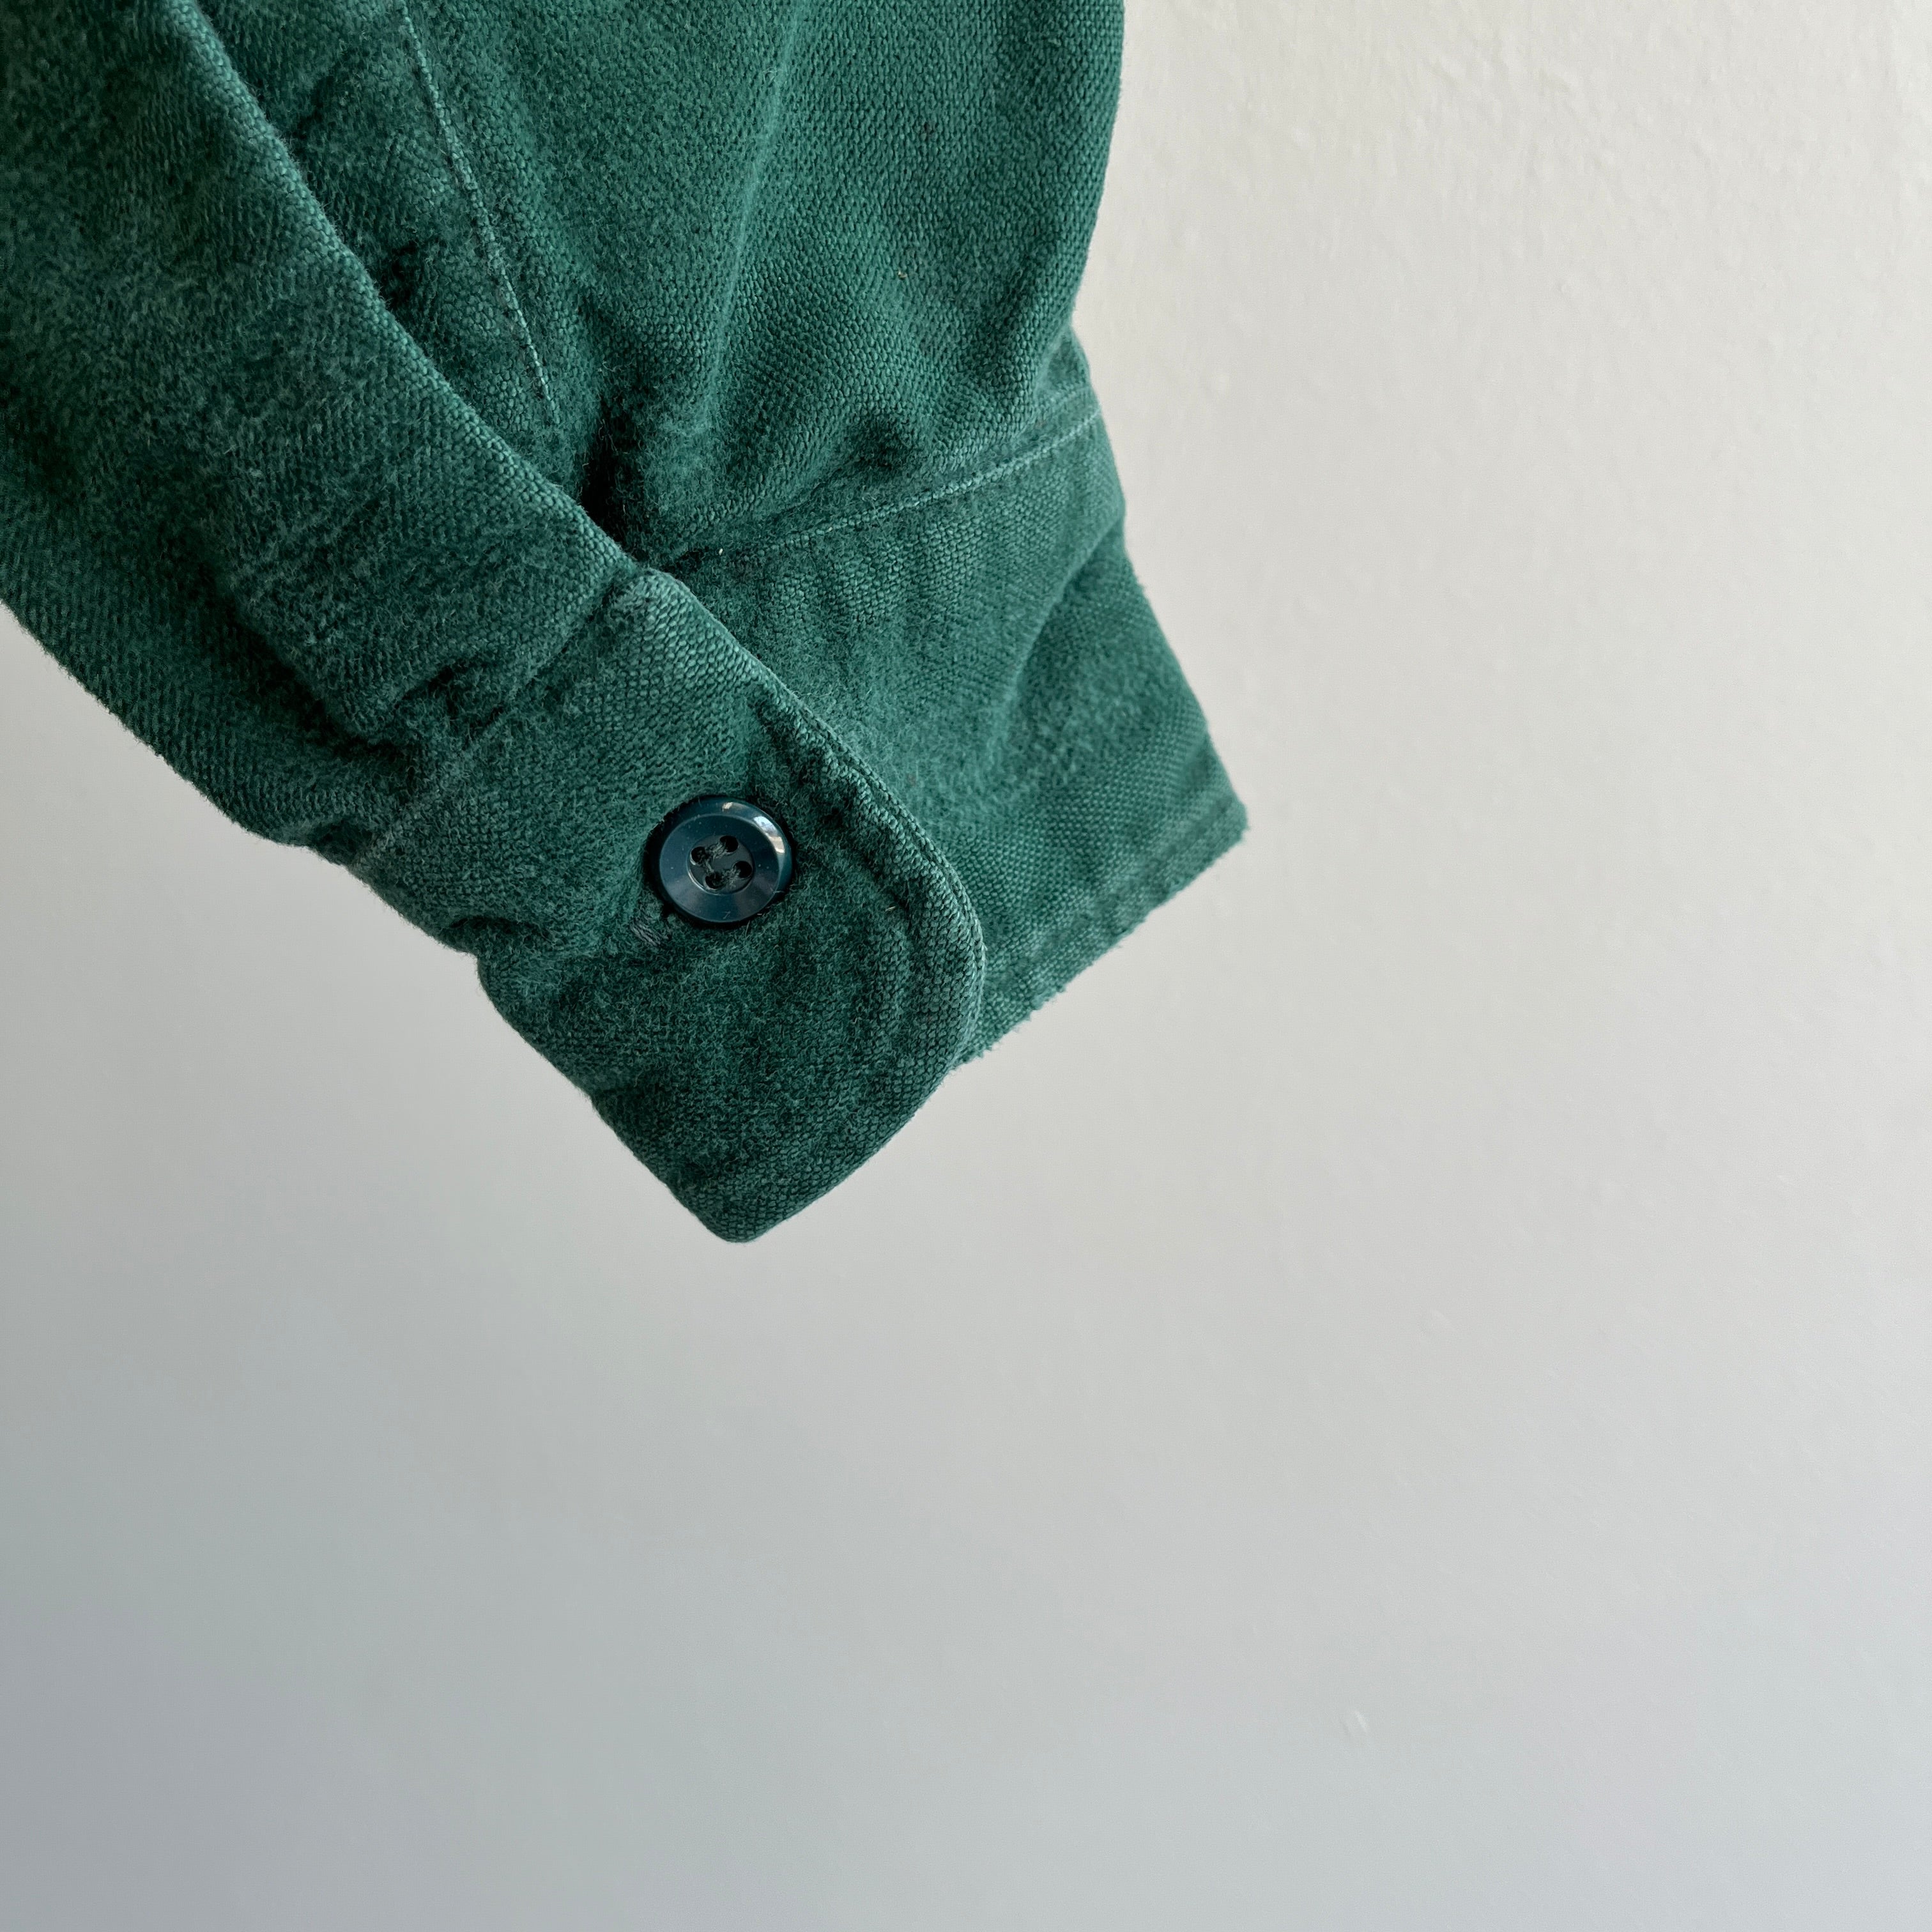 1950/60s Original Hudson Bay Medium Weight Hunter Green Cotton Flannel - Collectible!